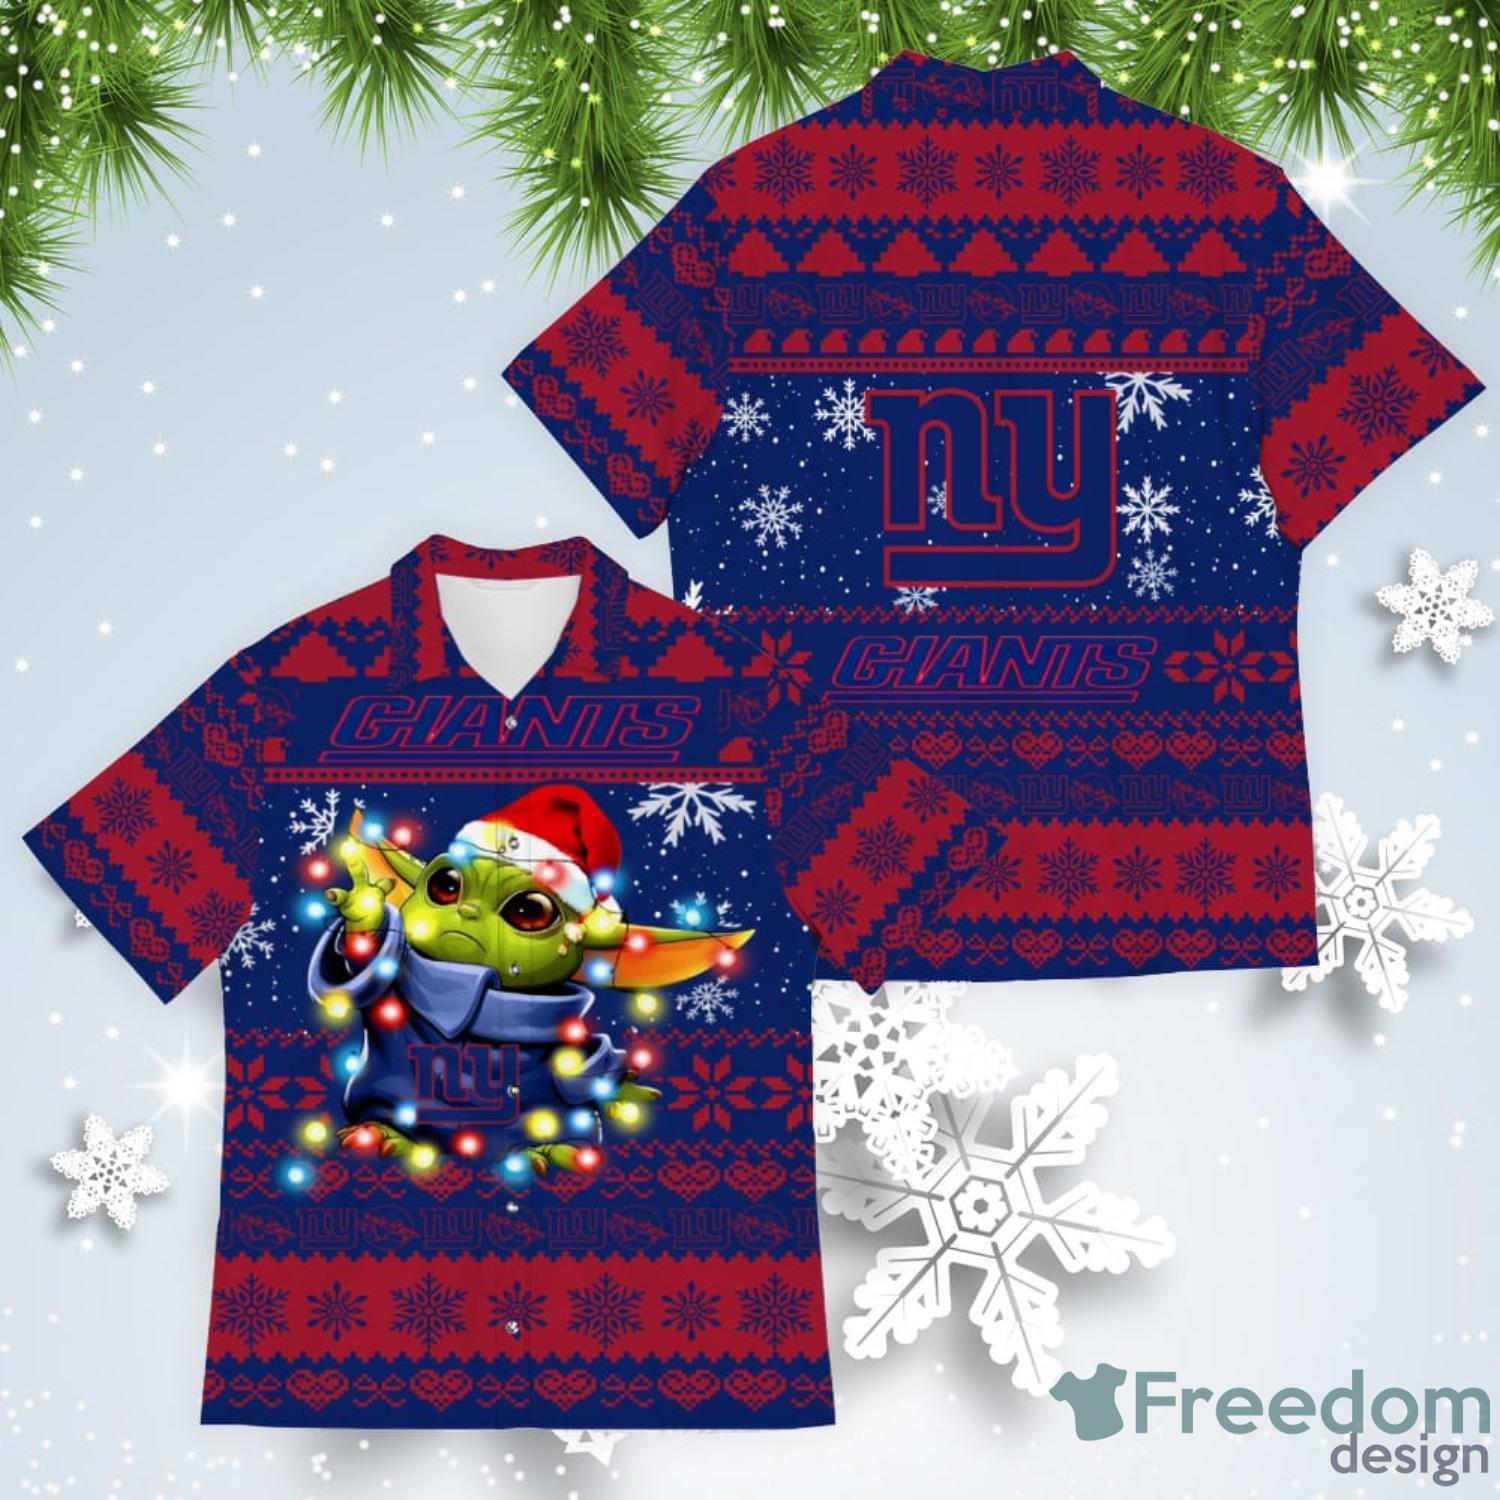 Baby Yoda New York Giants Ugly Christmas Sweater - Shirt Low Price